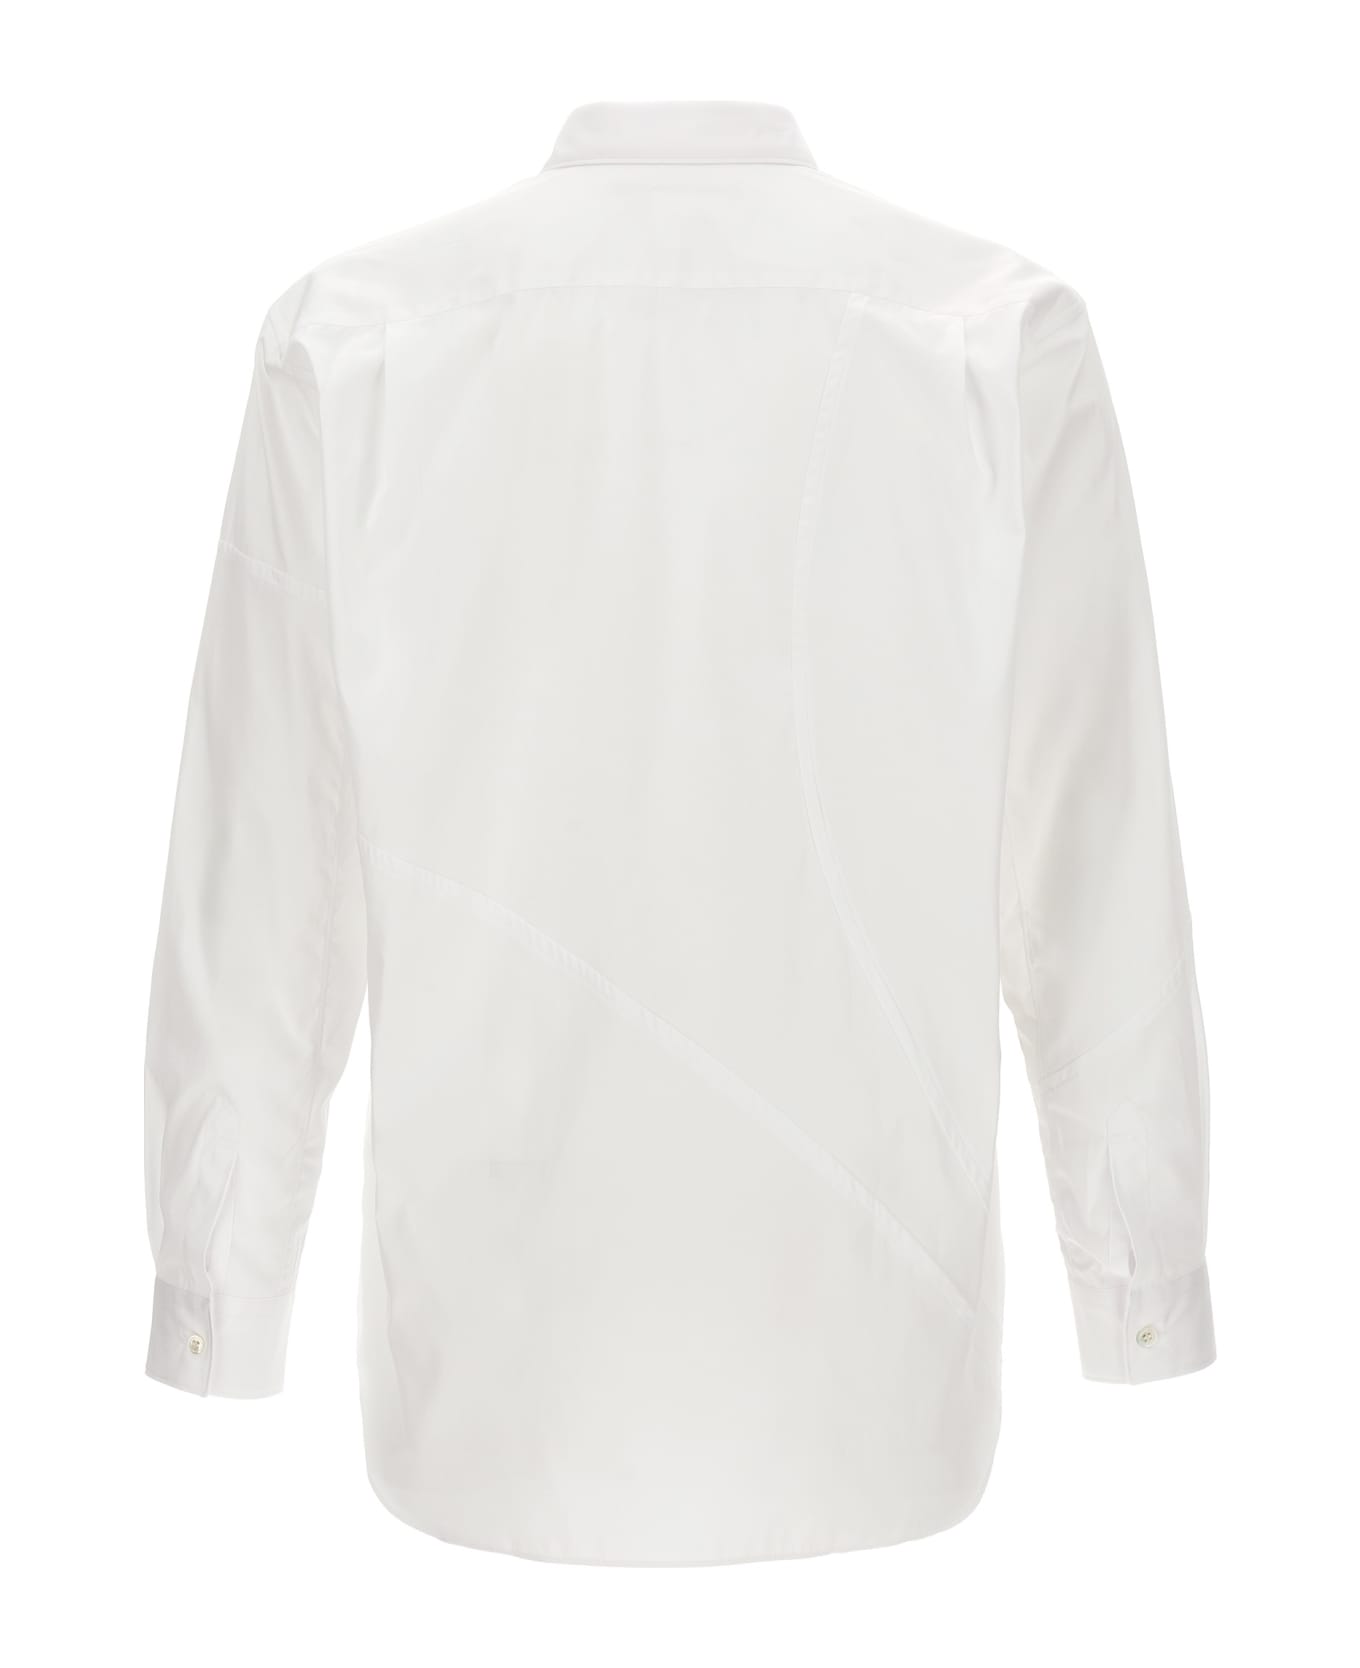 Comme des Garçons Shirt 'andy Warhol' Shirt - White Print シャツ